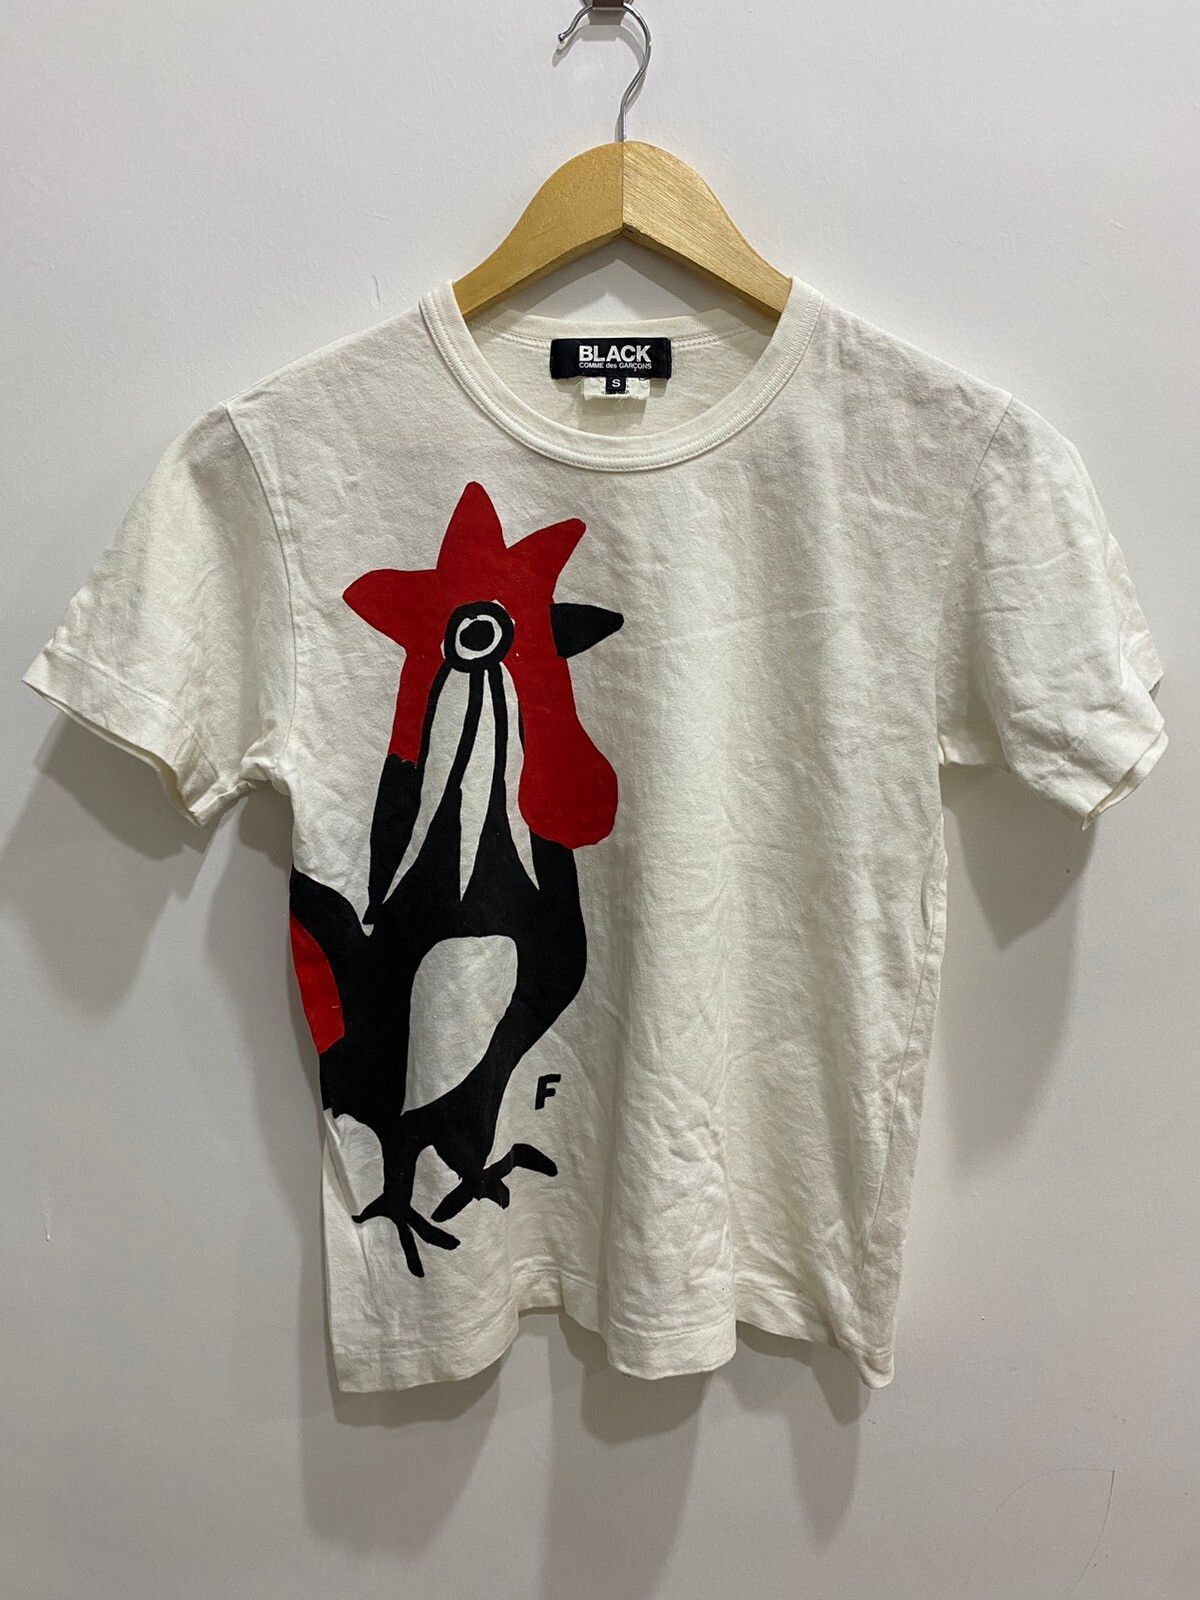 AW15 Comme Des Garçons Black Rooster T-Shirt - 1